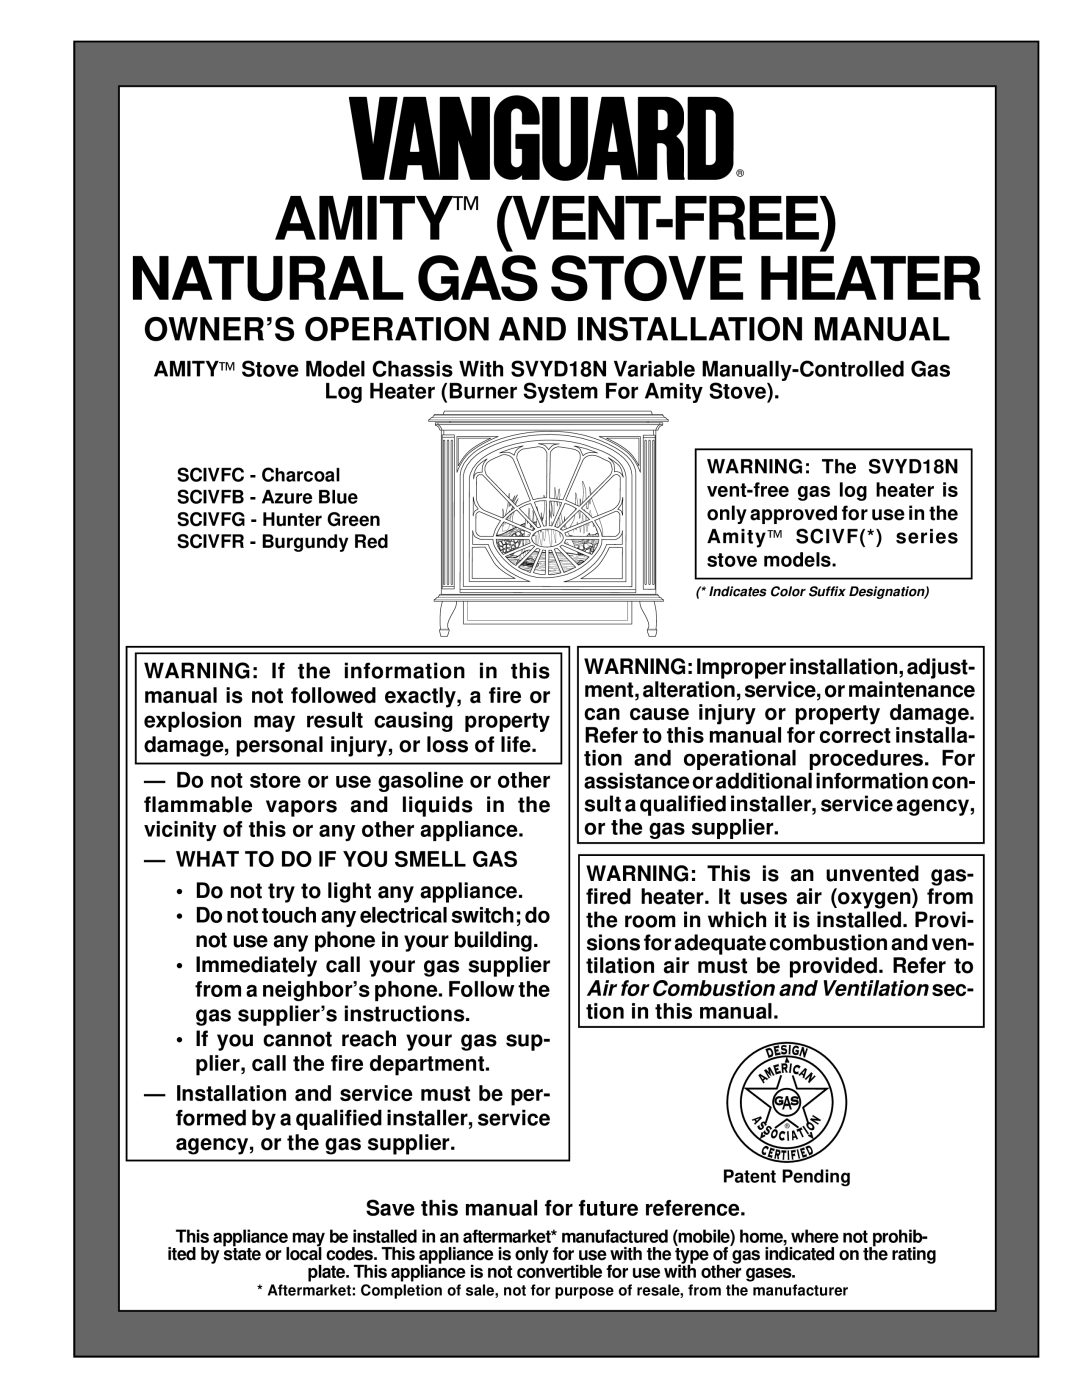 Desa SVYD18N installation manual Owner’S Operation And Installation Manual, Amity Vent-Free Natural Gas Stove Heater 